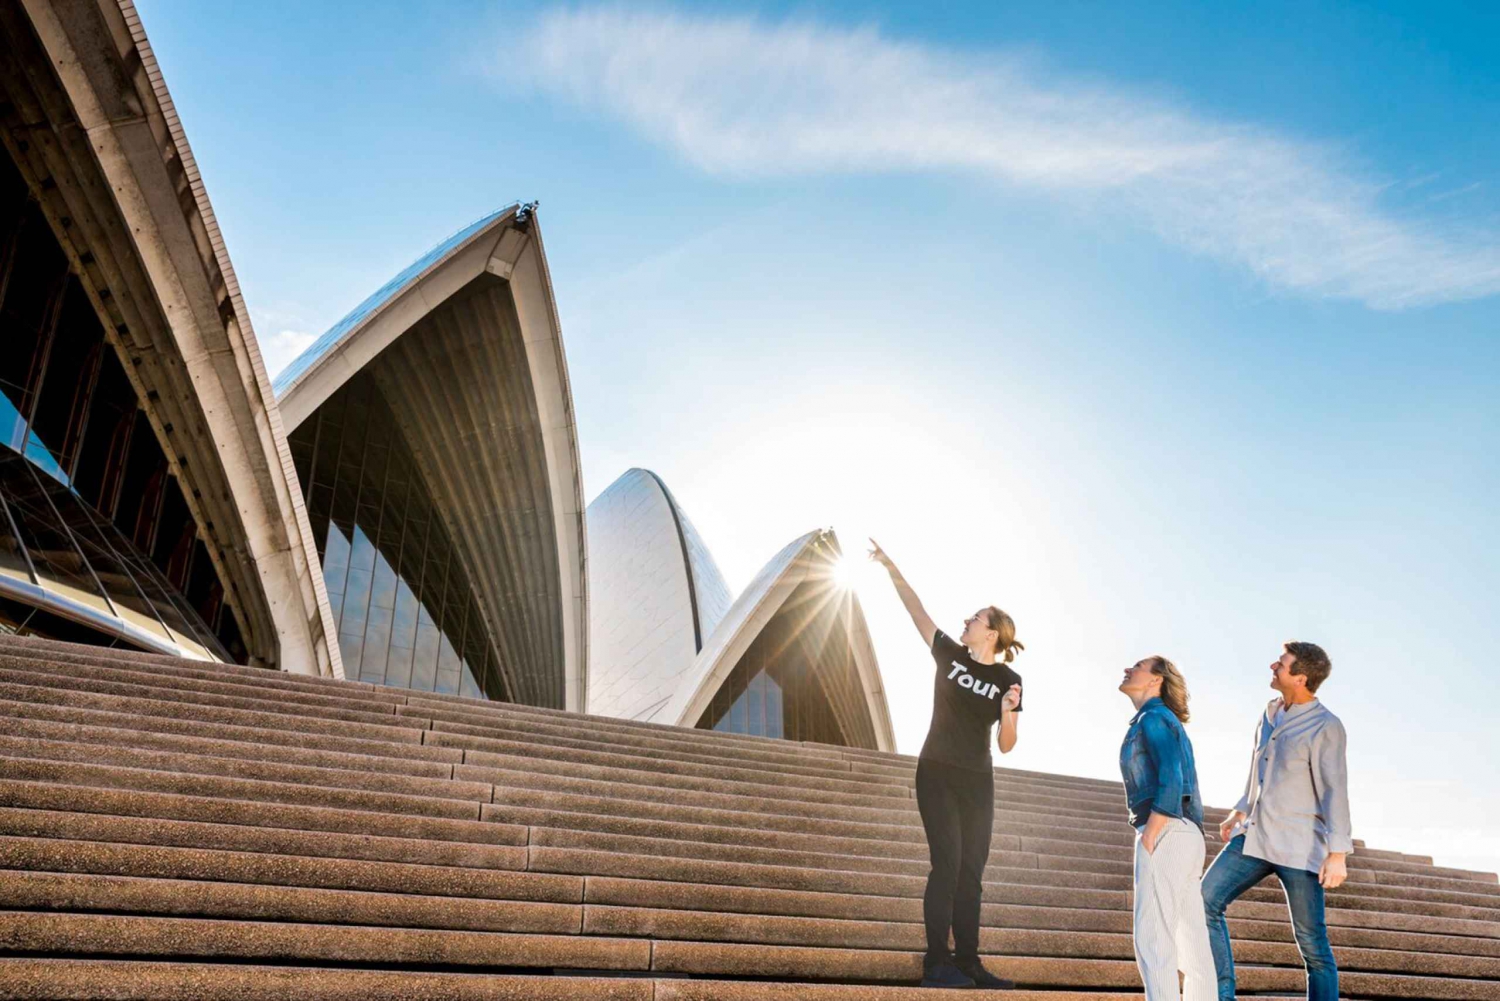 Sydney: Go City Explorer Pass 3, 4, 5, or 7 Attractions